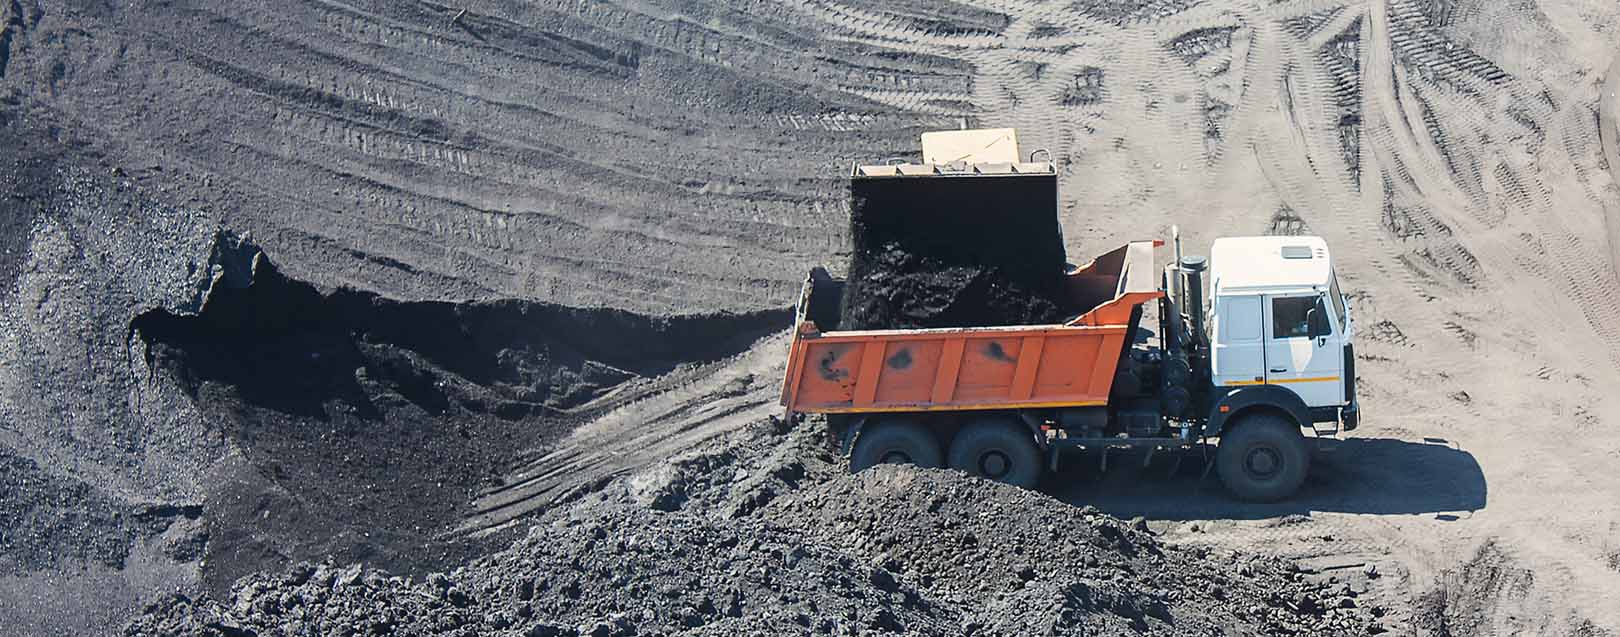 NTPC opens Pakri-Barwadih coal mine project